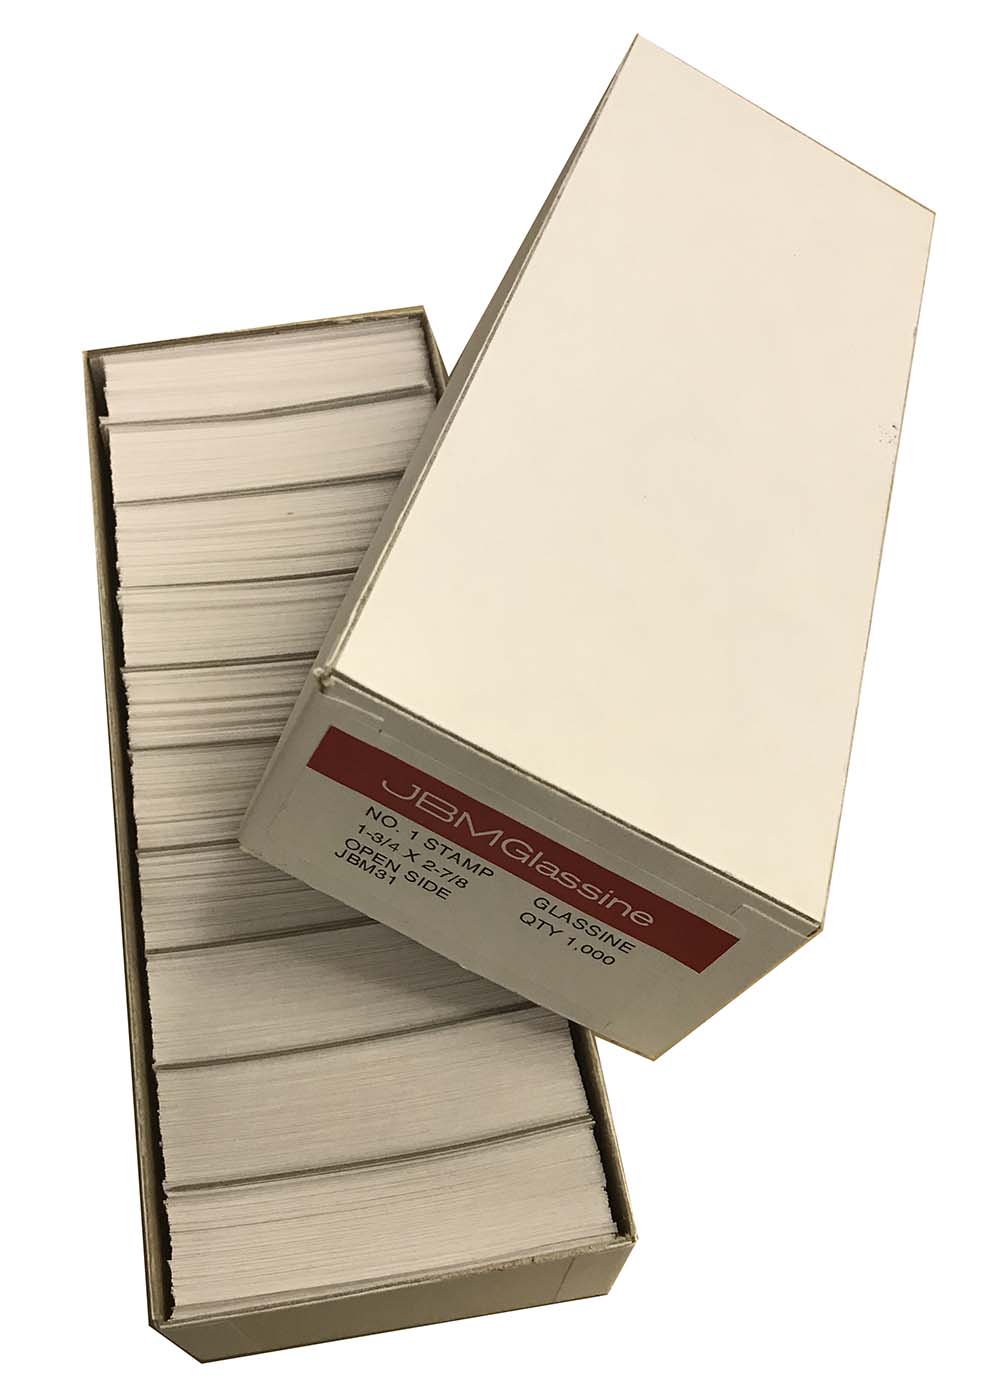 JBM JBM31 Glassine Envelopes #1 -- 2 7/8 x 1 3/4